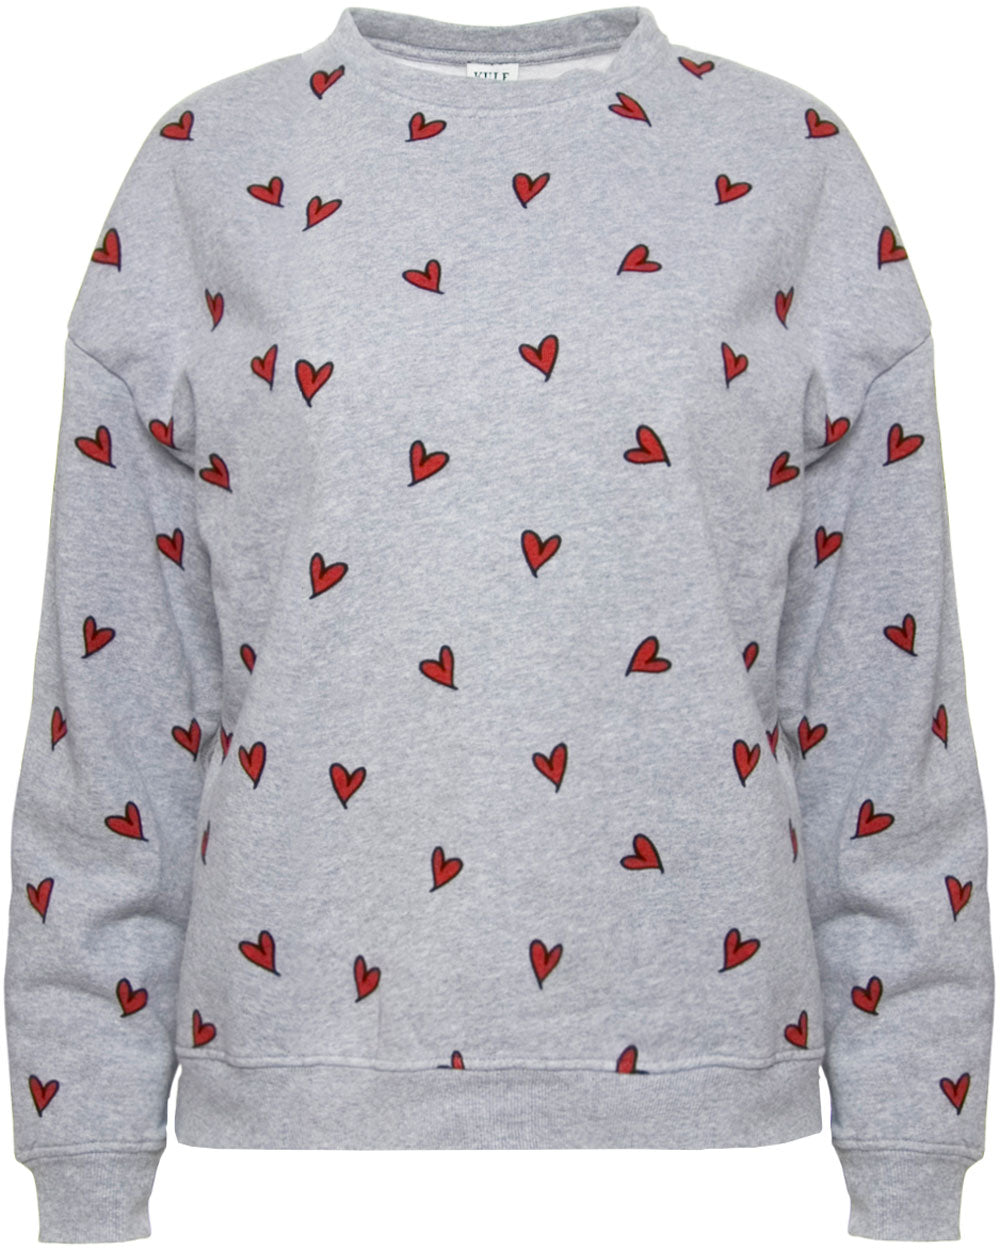 The Oversized Hearts Sweatshirt in Heather Grey